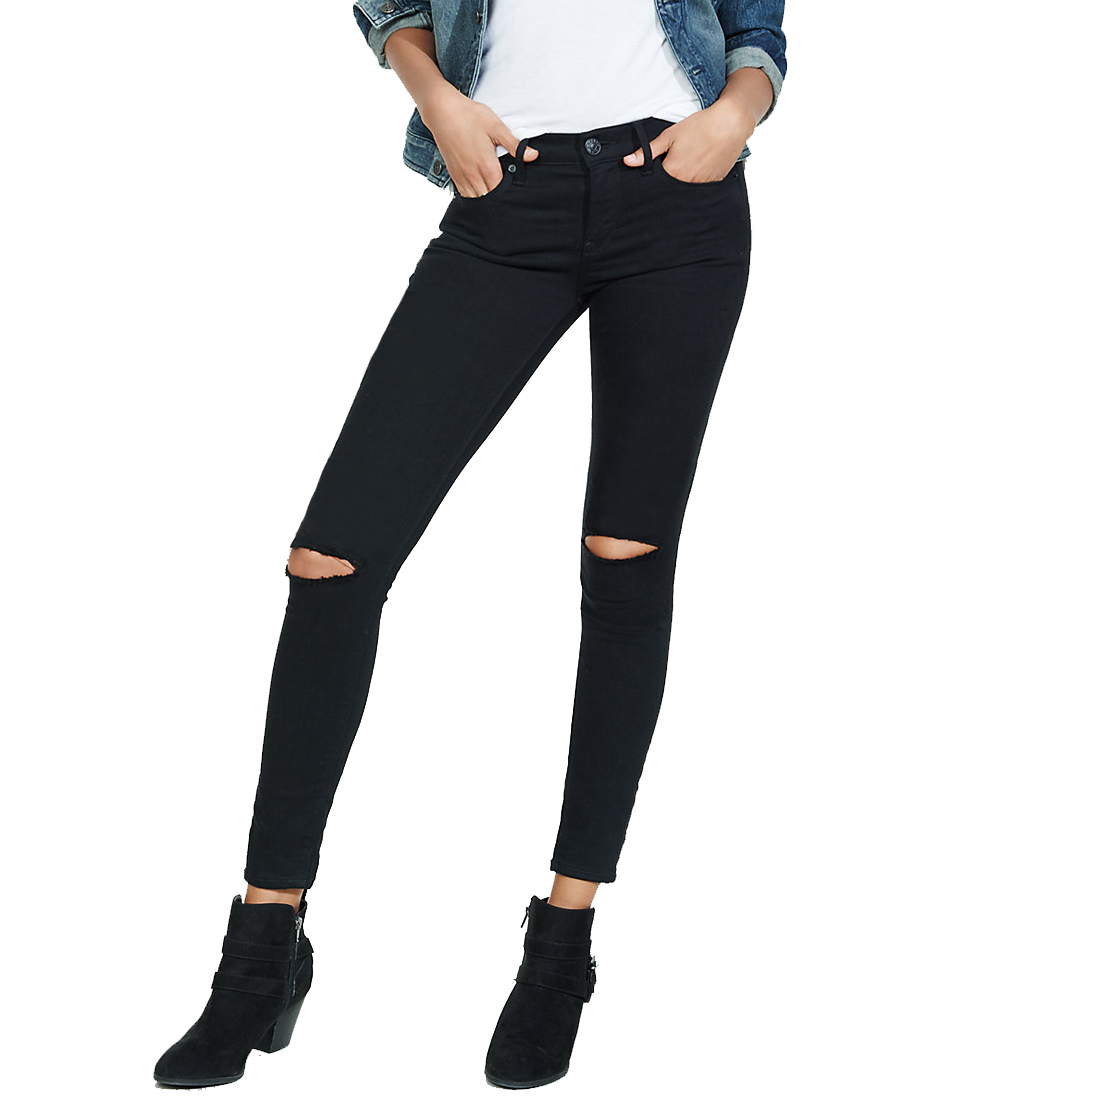 Buy XEE Women Black Slim Fit Ripped Jeans Online - Get 58% Off